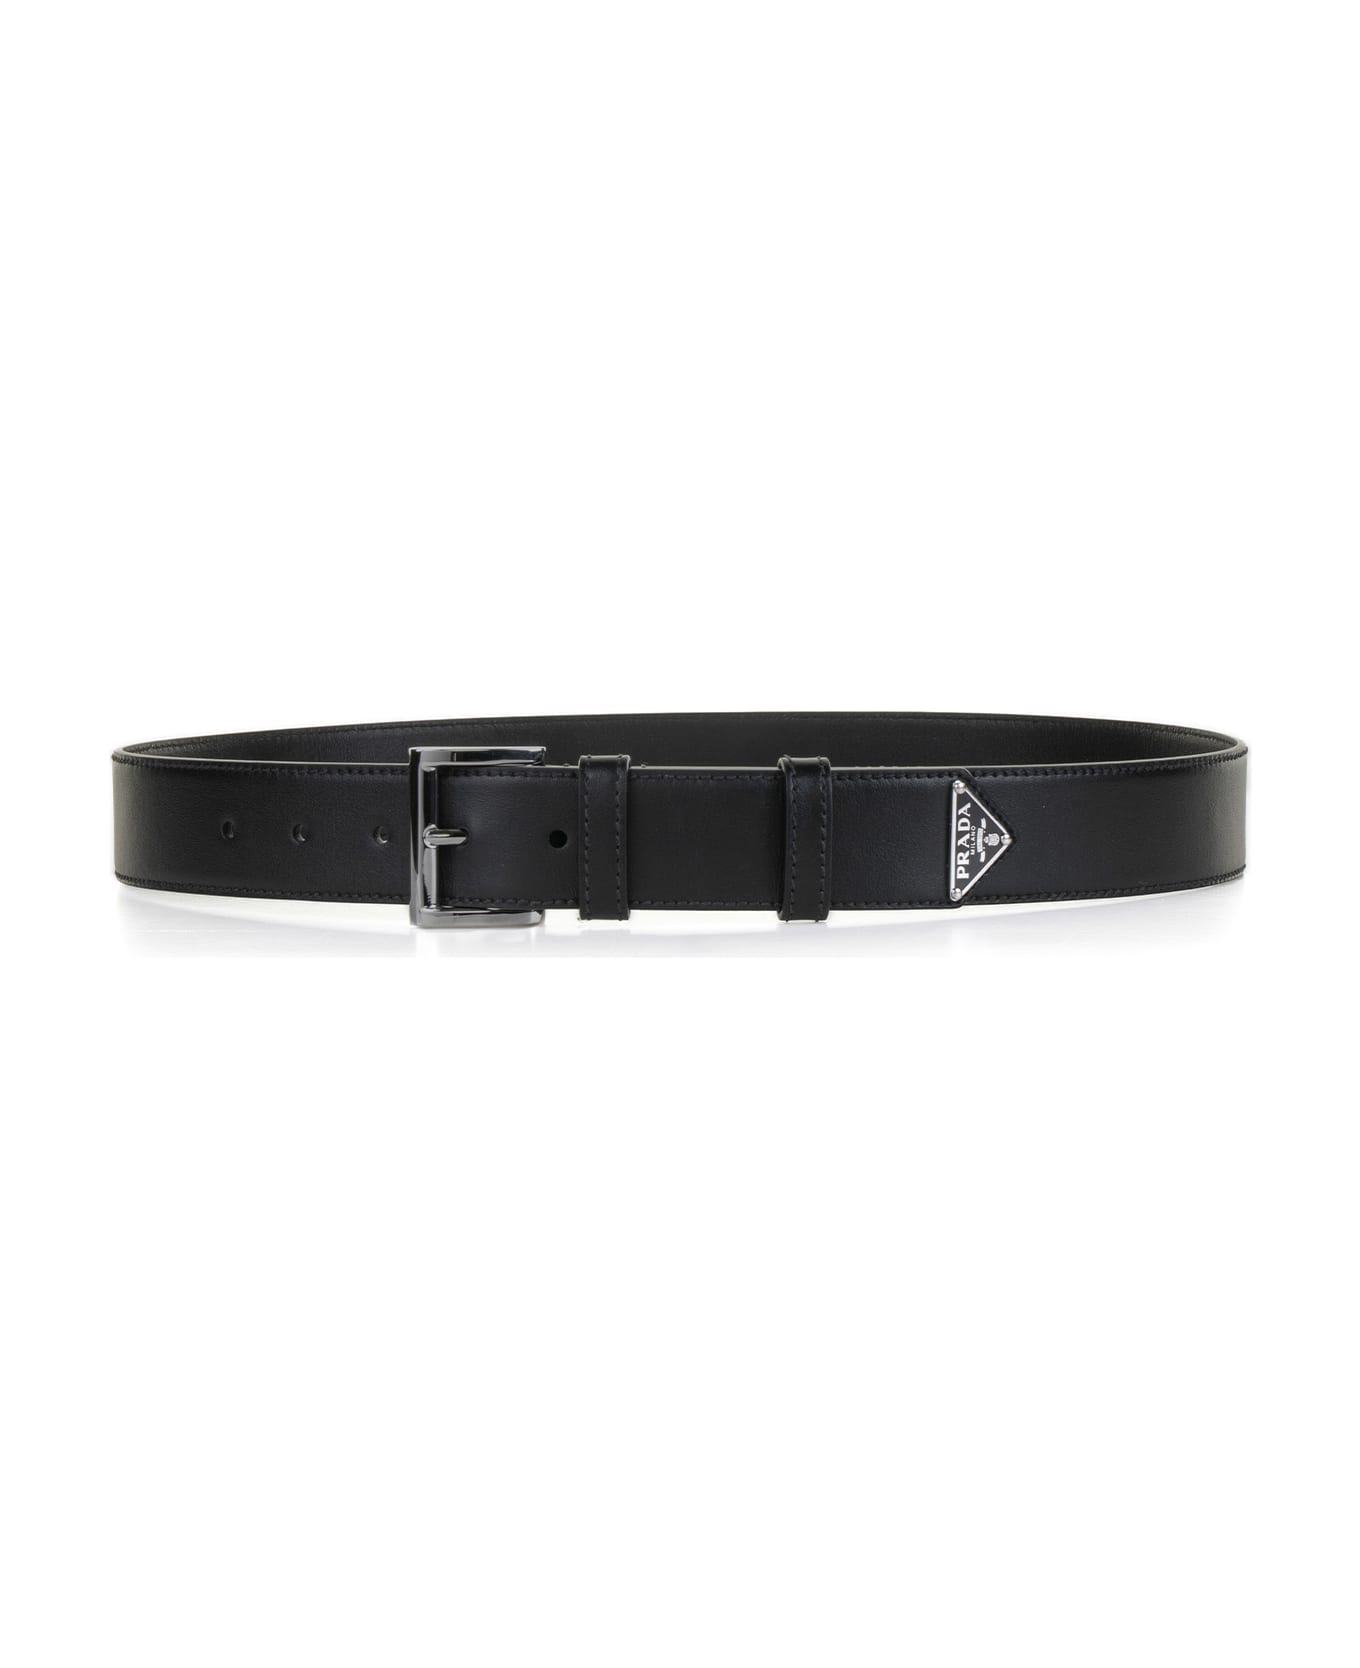 Prada Leather Belt With Triangle Logo - NERO